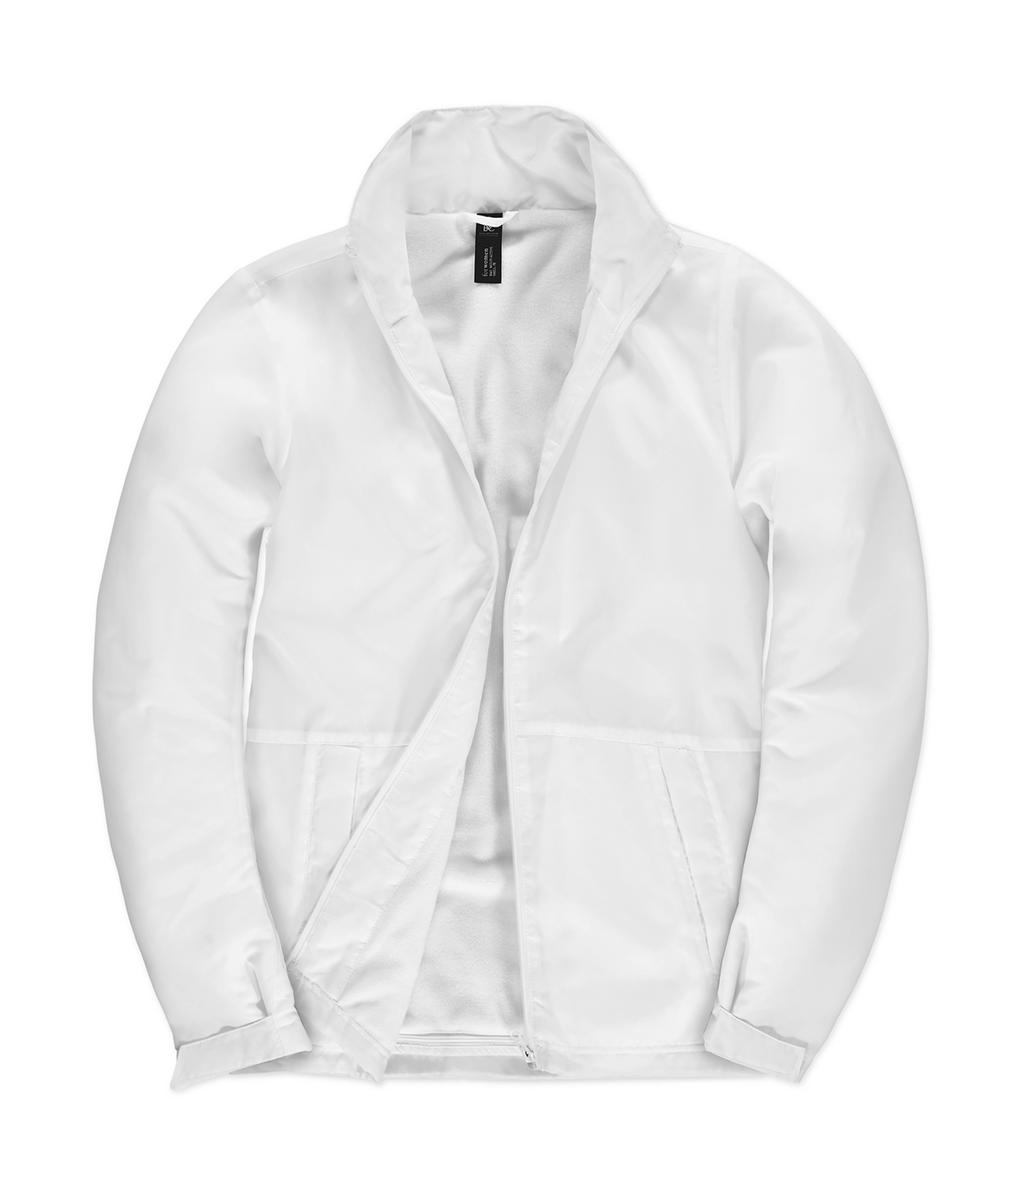  Multi-Active/women Jacket in Farbe White/White